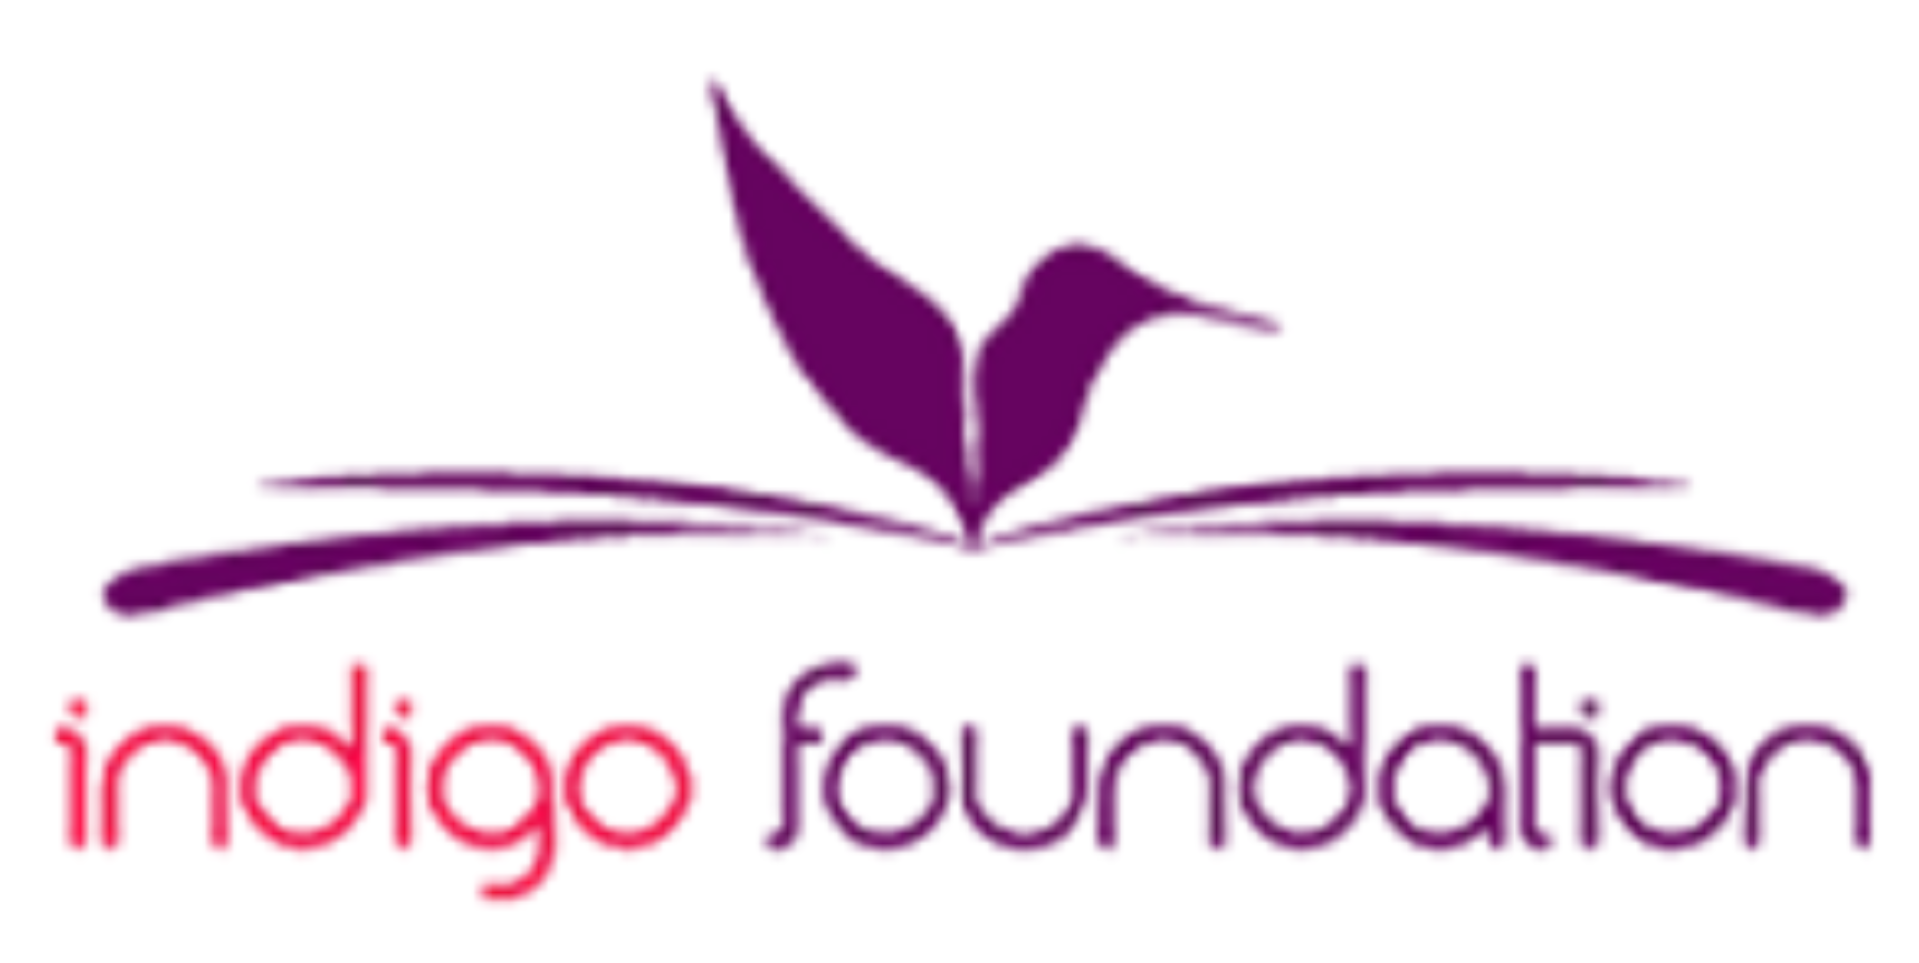 Indigo foundation logo